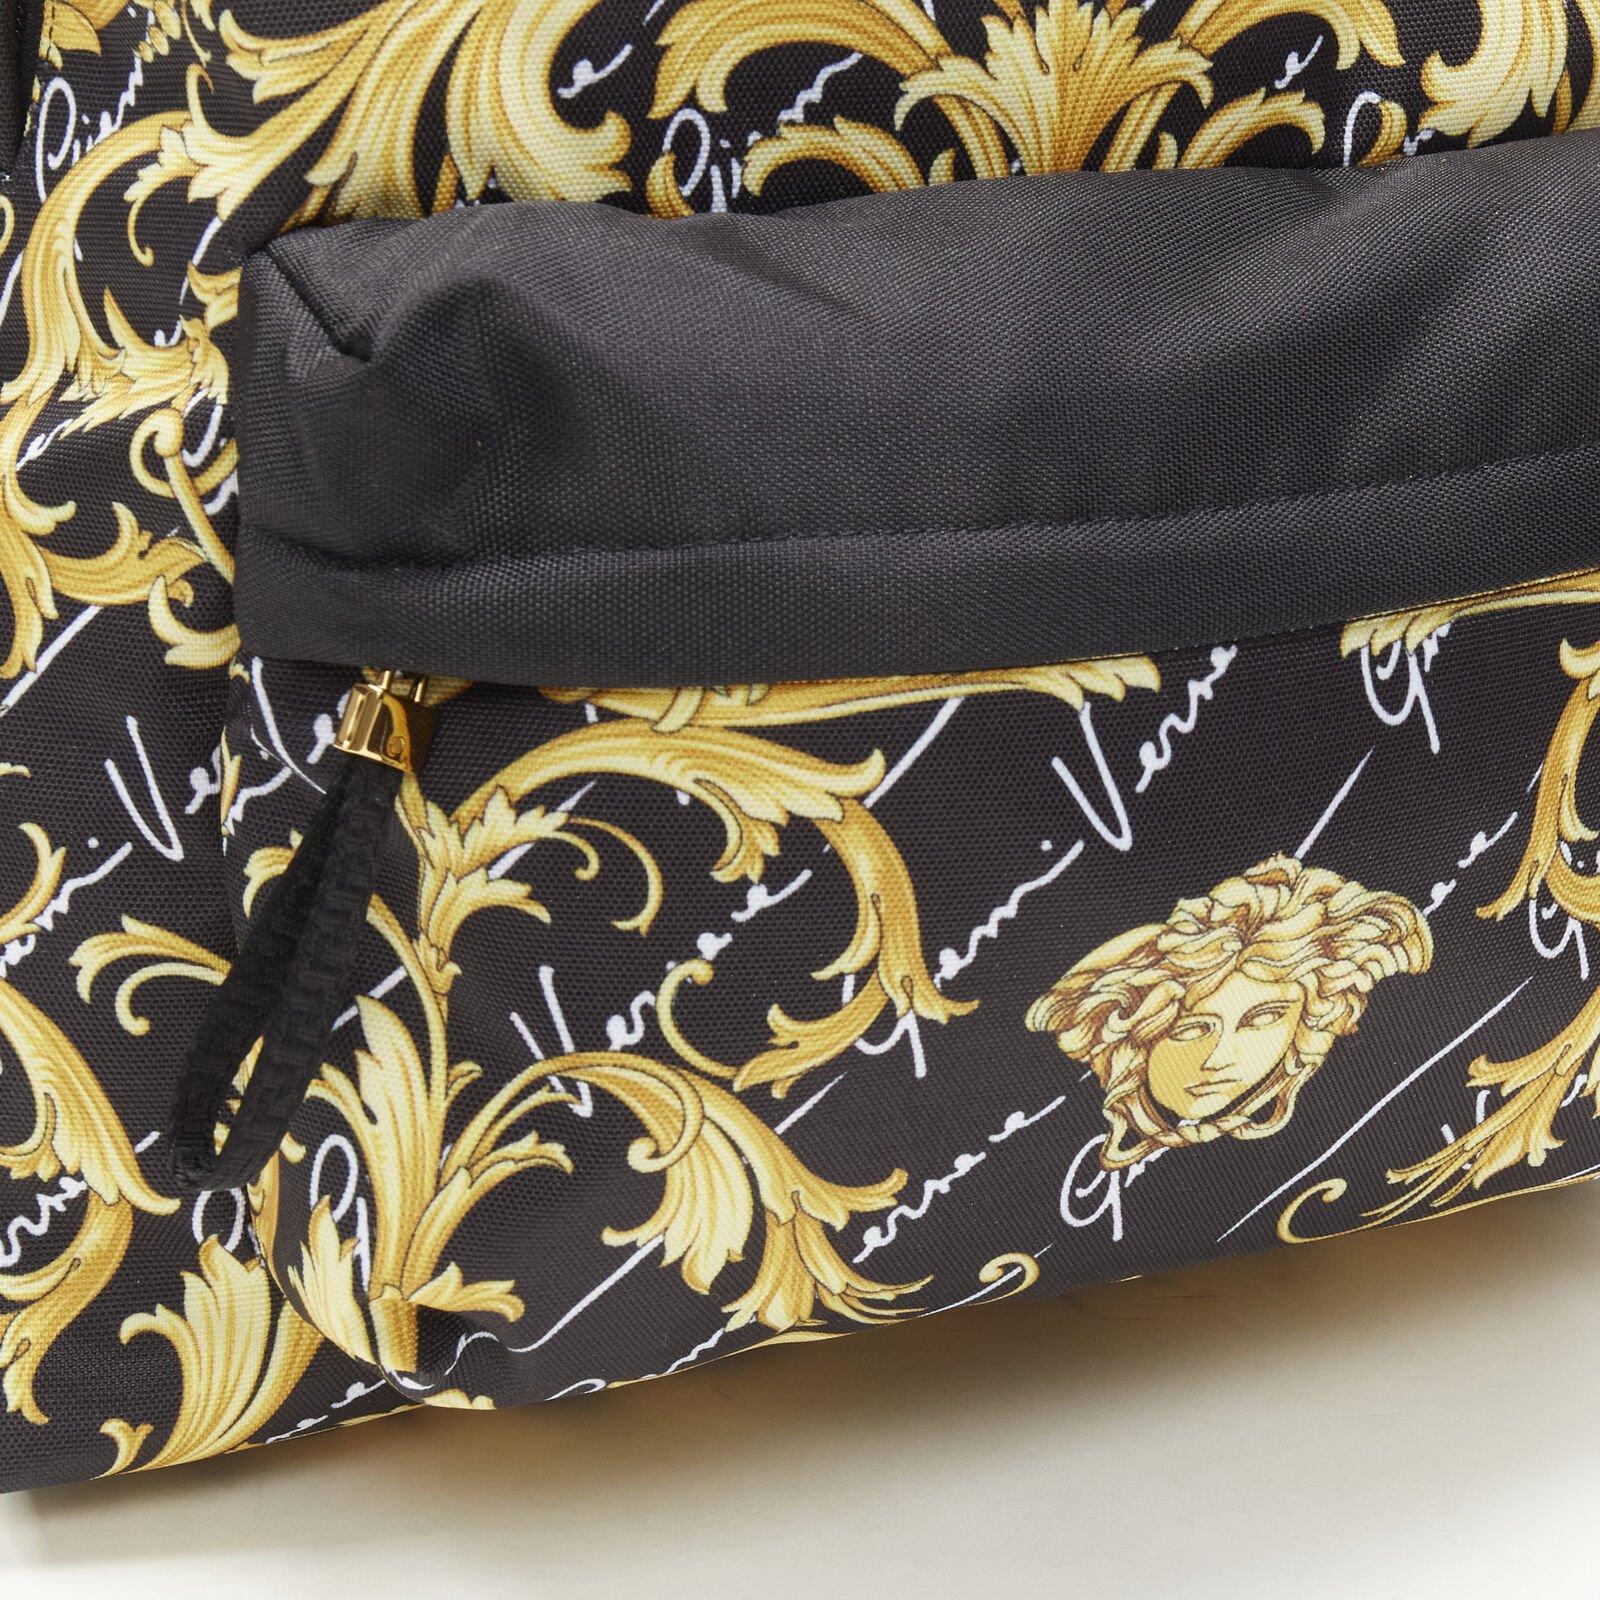 VERSACE Gianni Signature gold Barocco Virtus Medusa print nylon backpack bag For Sale 4